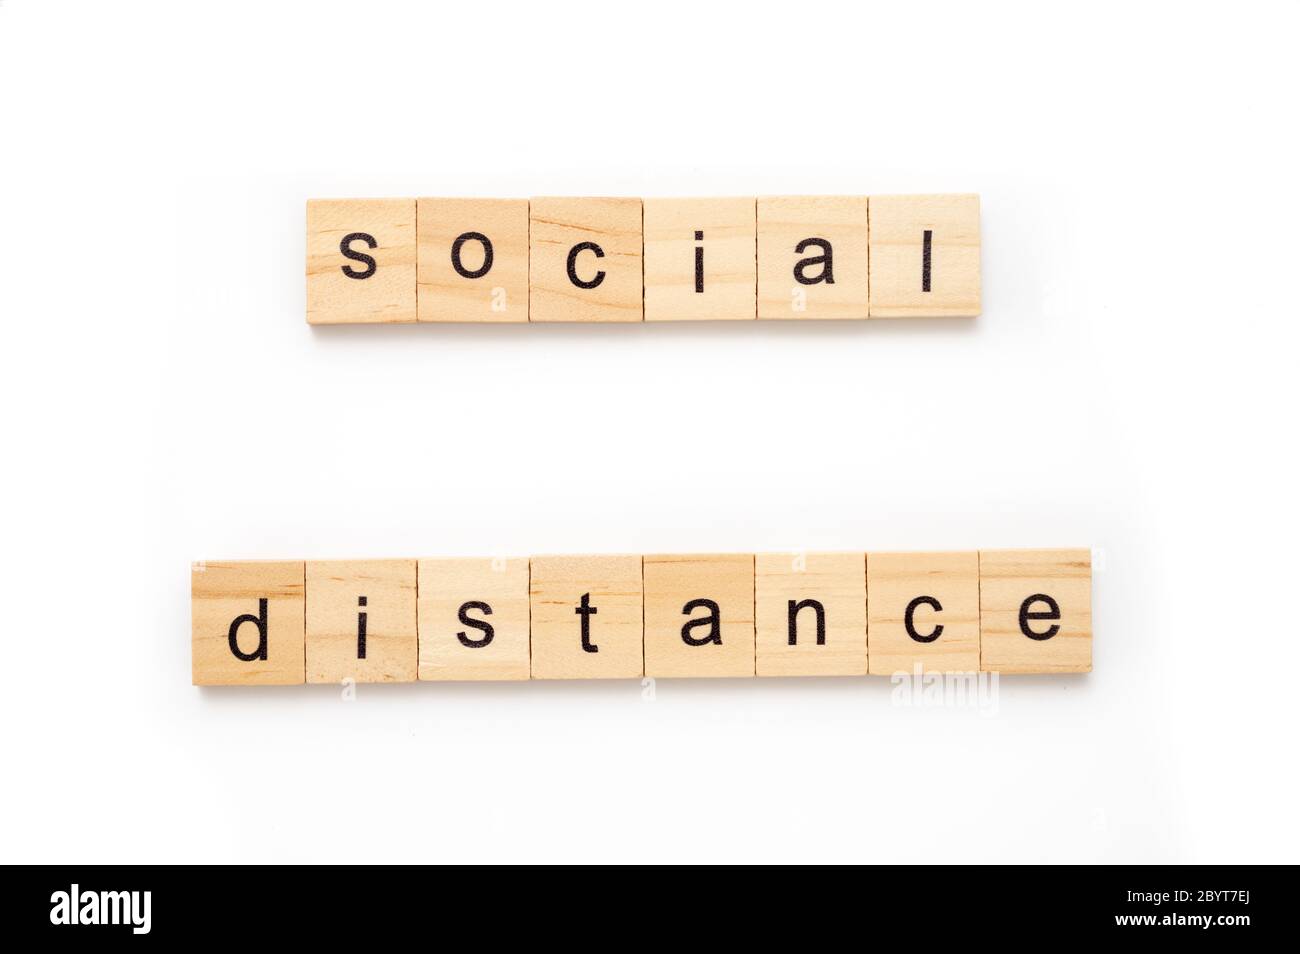 Generic wood scrabble tiles spelling words Social Distance Stock Photo